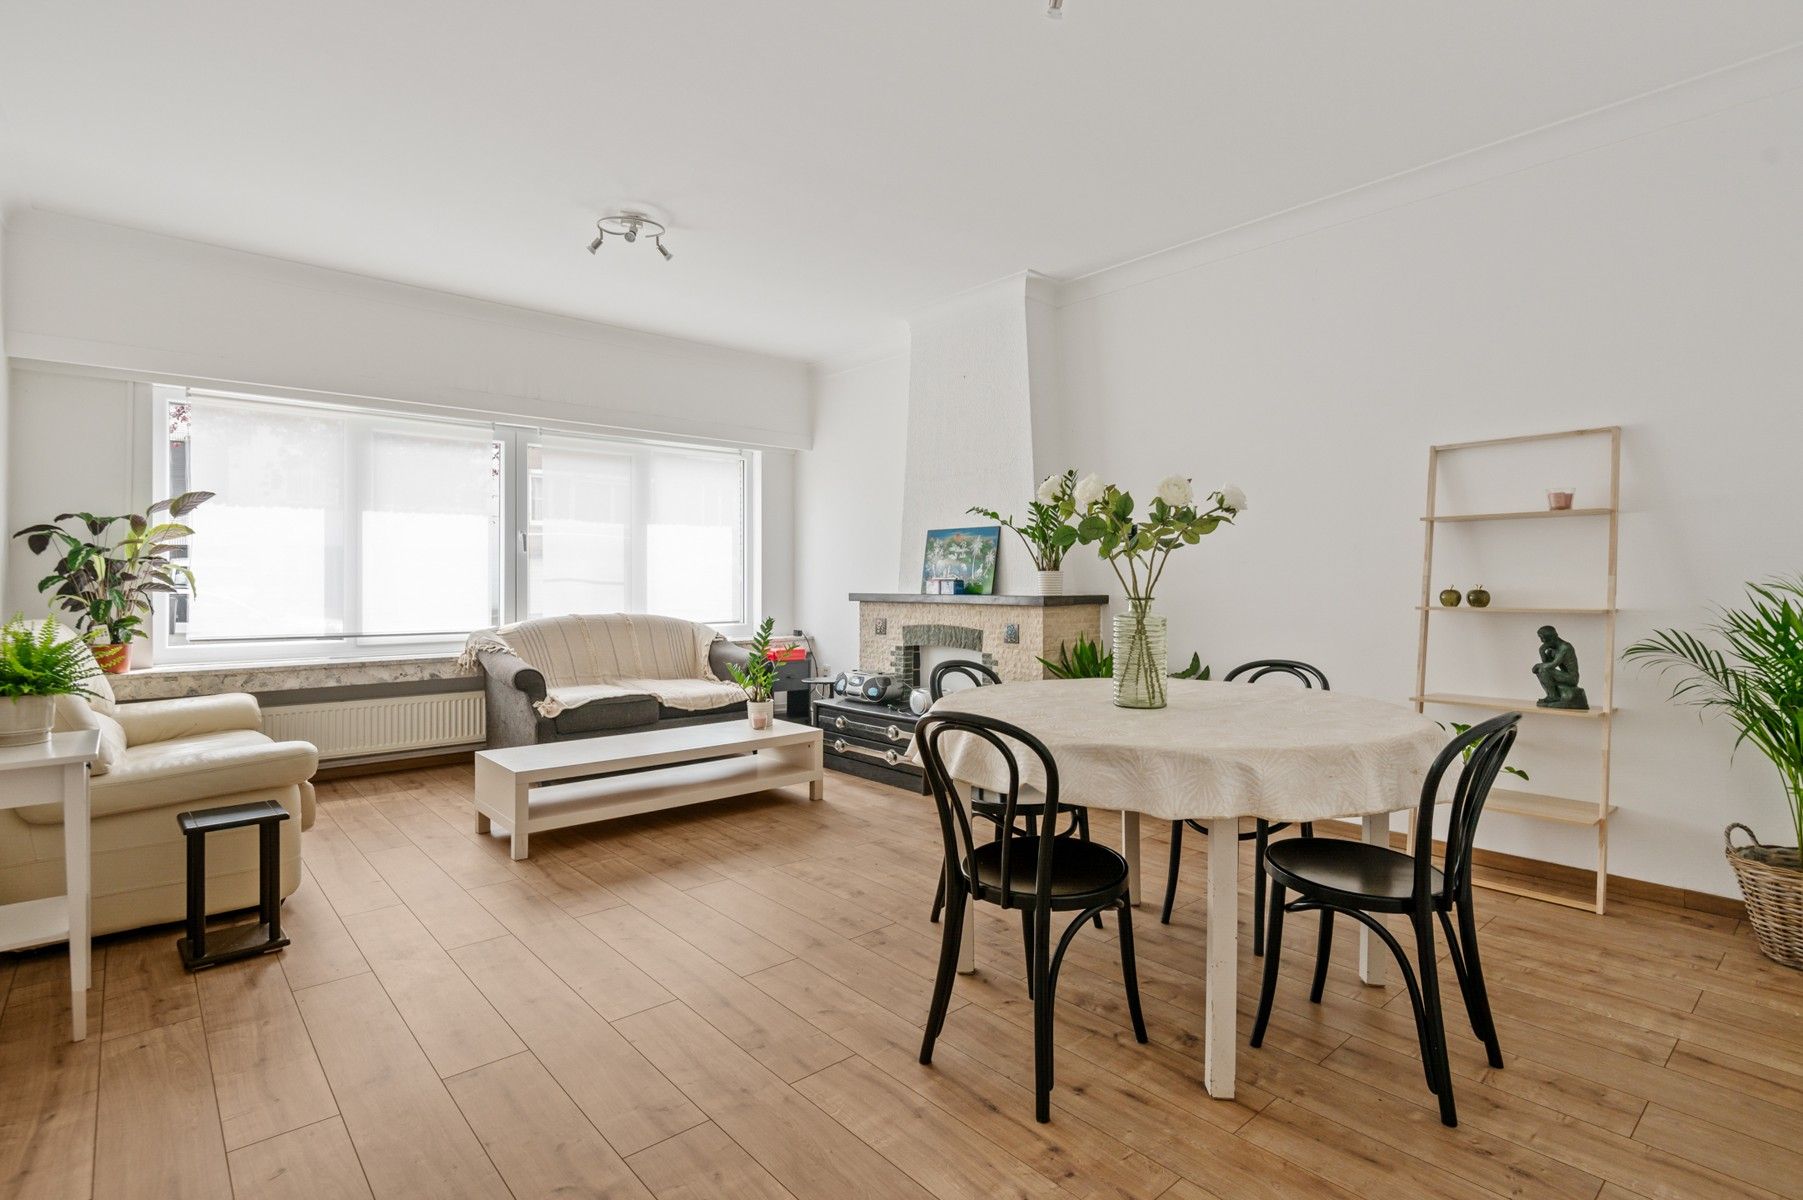 Appartement te koop Jozef Mulsstraat 35 - 2170 Merksem